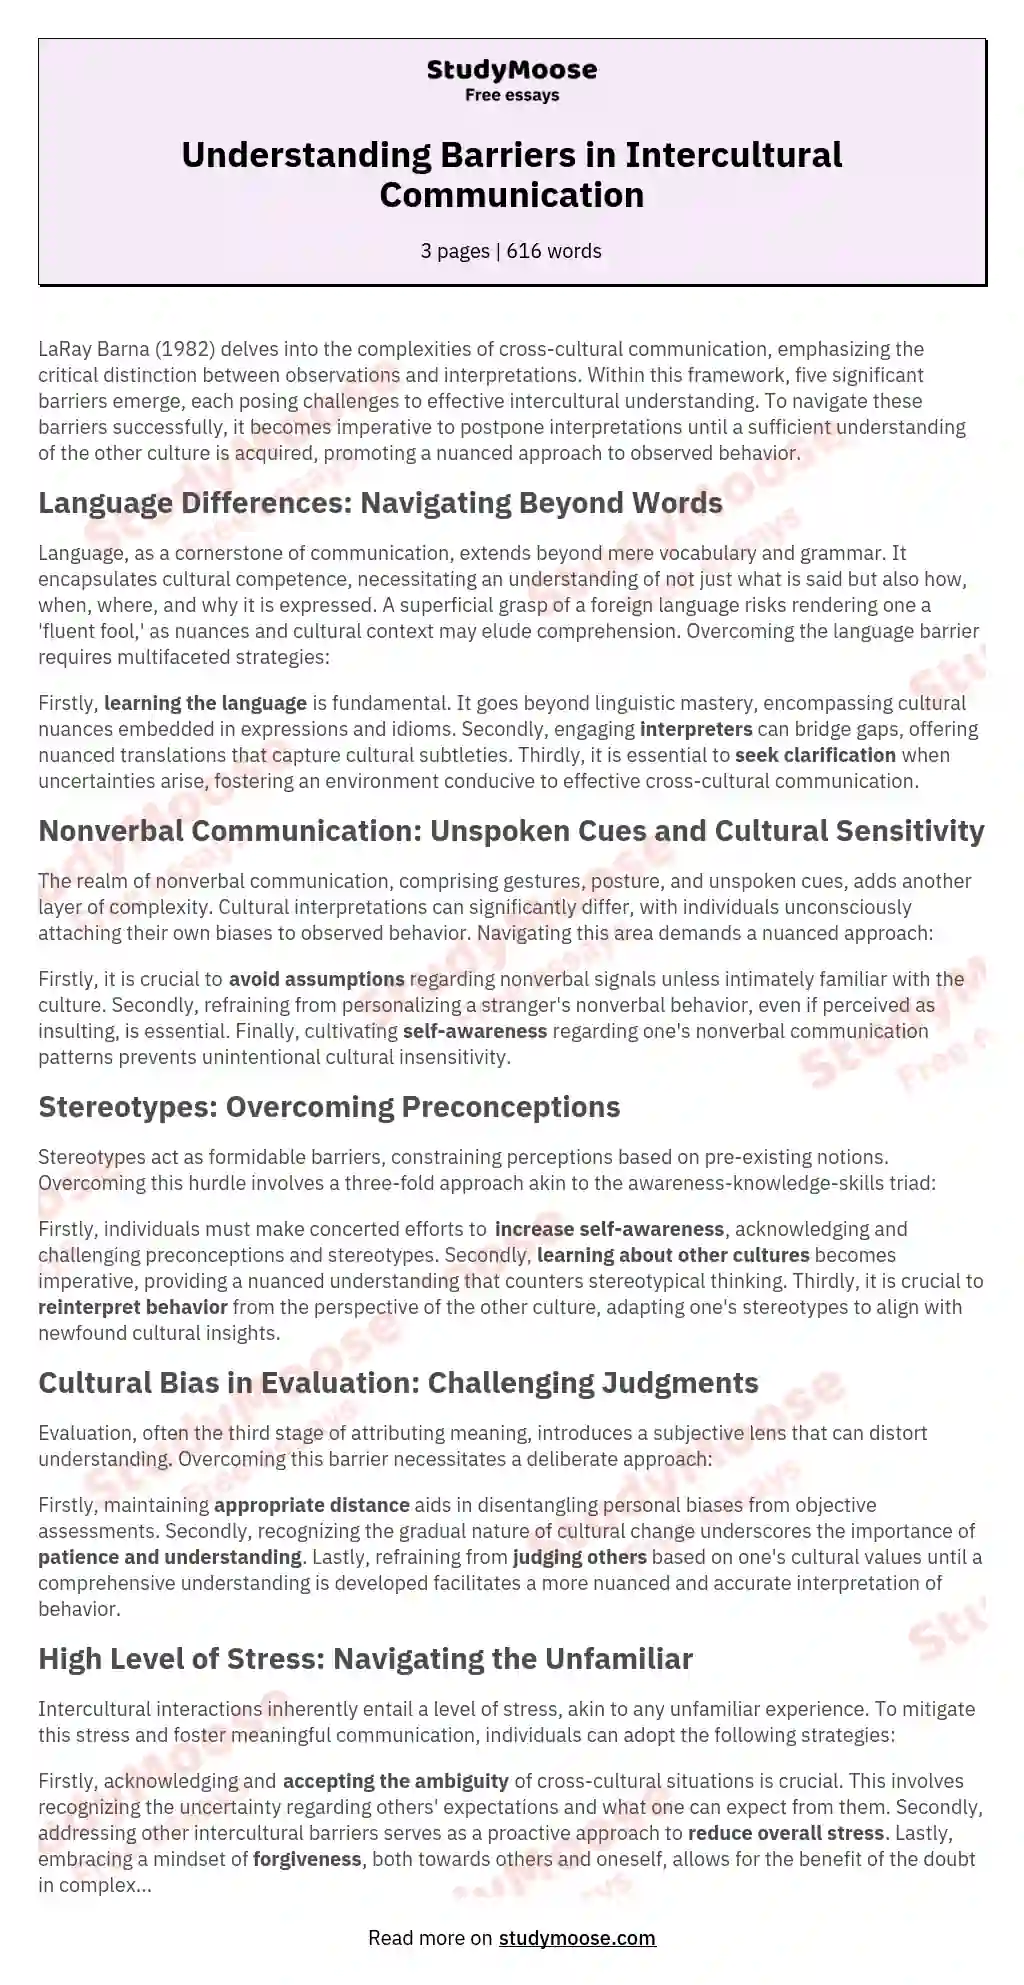 Understanding Barriers in Intercultural Communication essay